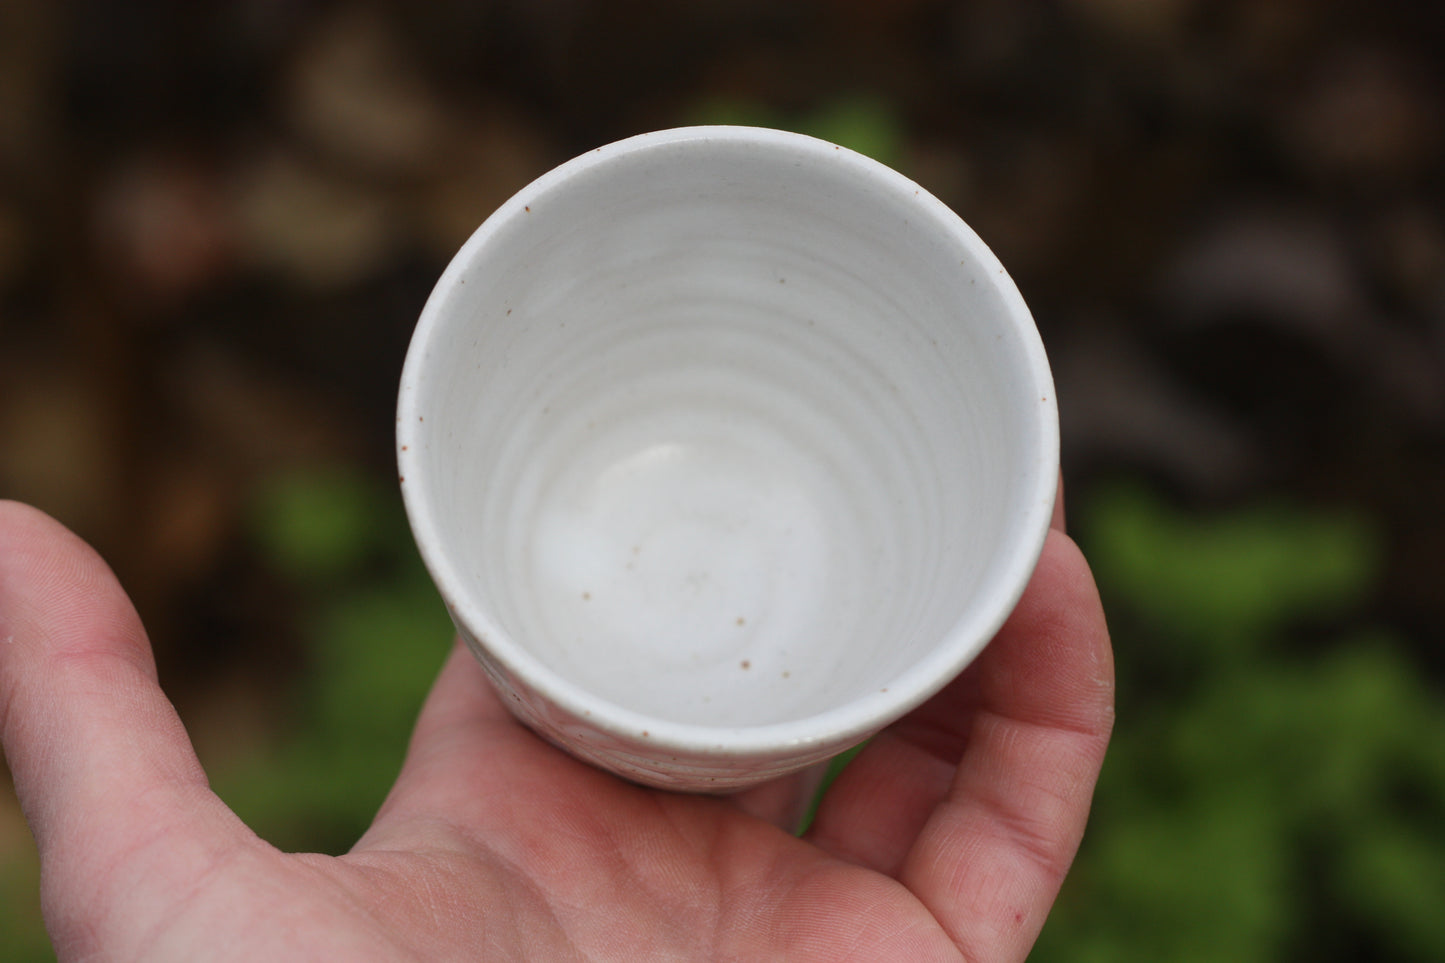 100ml 4 oz Pottery Espresso Small Shot Cup Handle free handmade stacking ceramic beaker tumbler